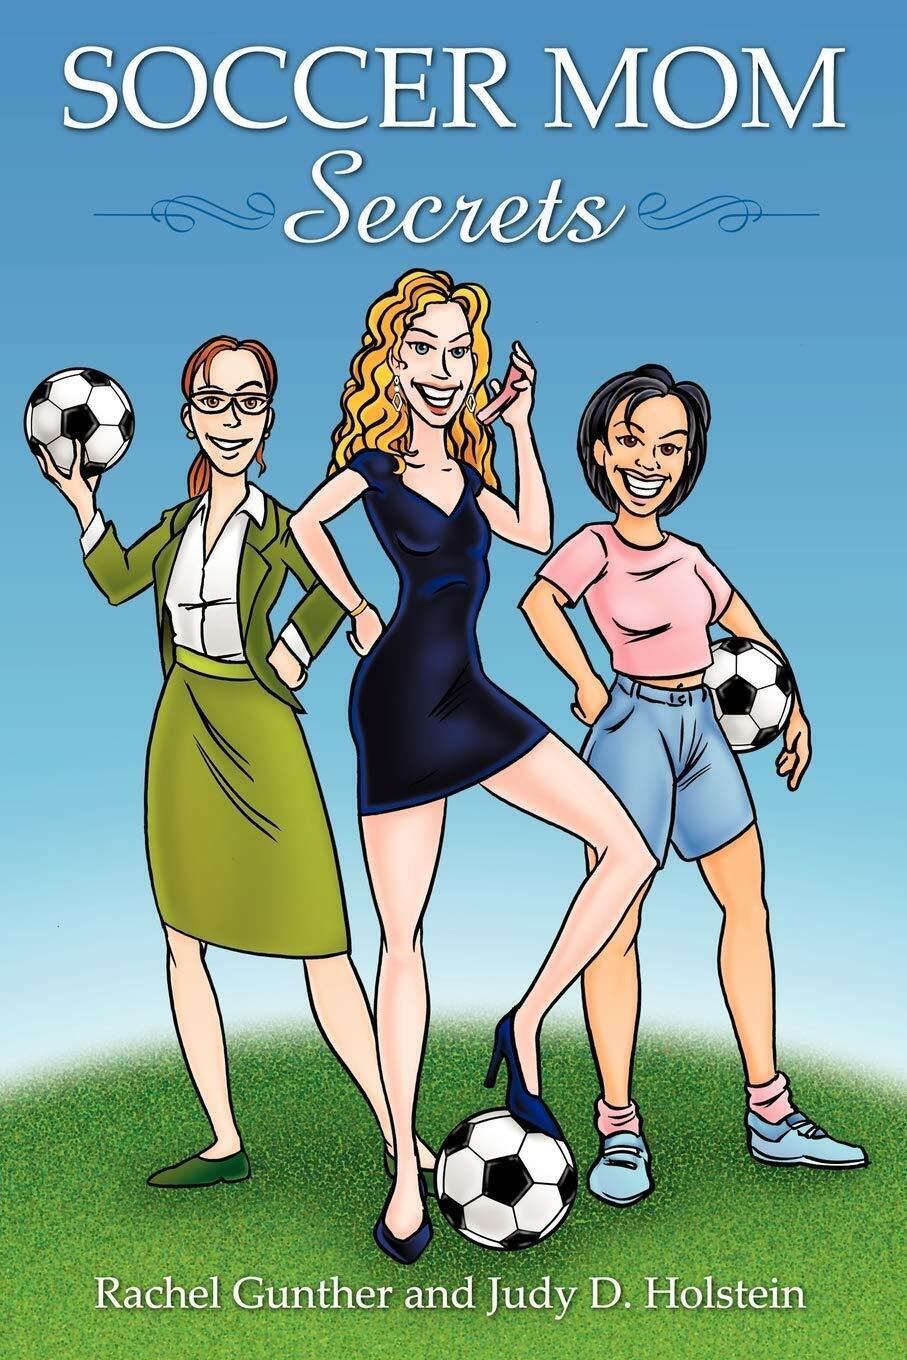 Soccer Mom Secrets - Rachel Gunther, Judy D. Holstein - AuthorHouse, 2007 libro usato